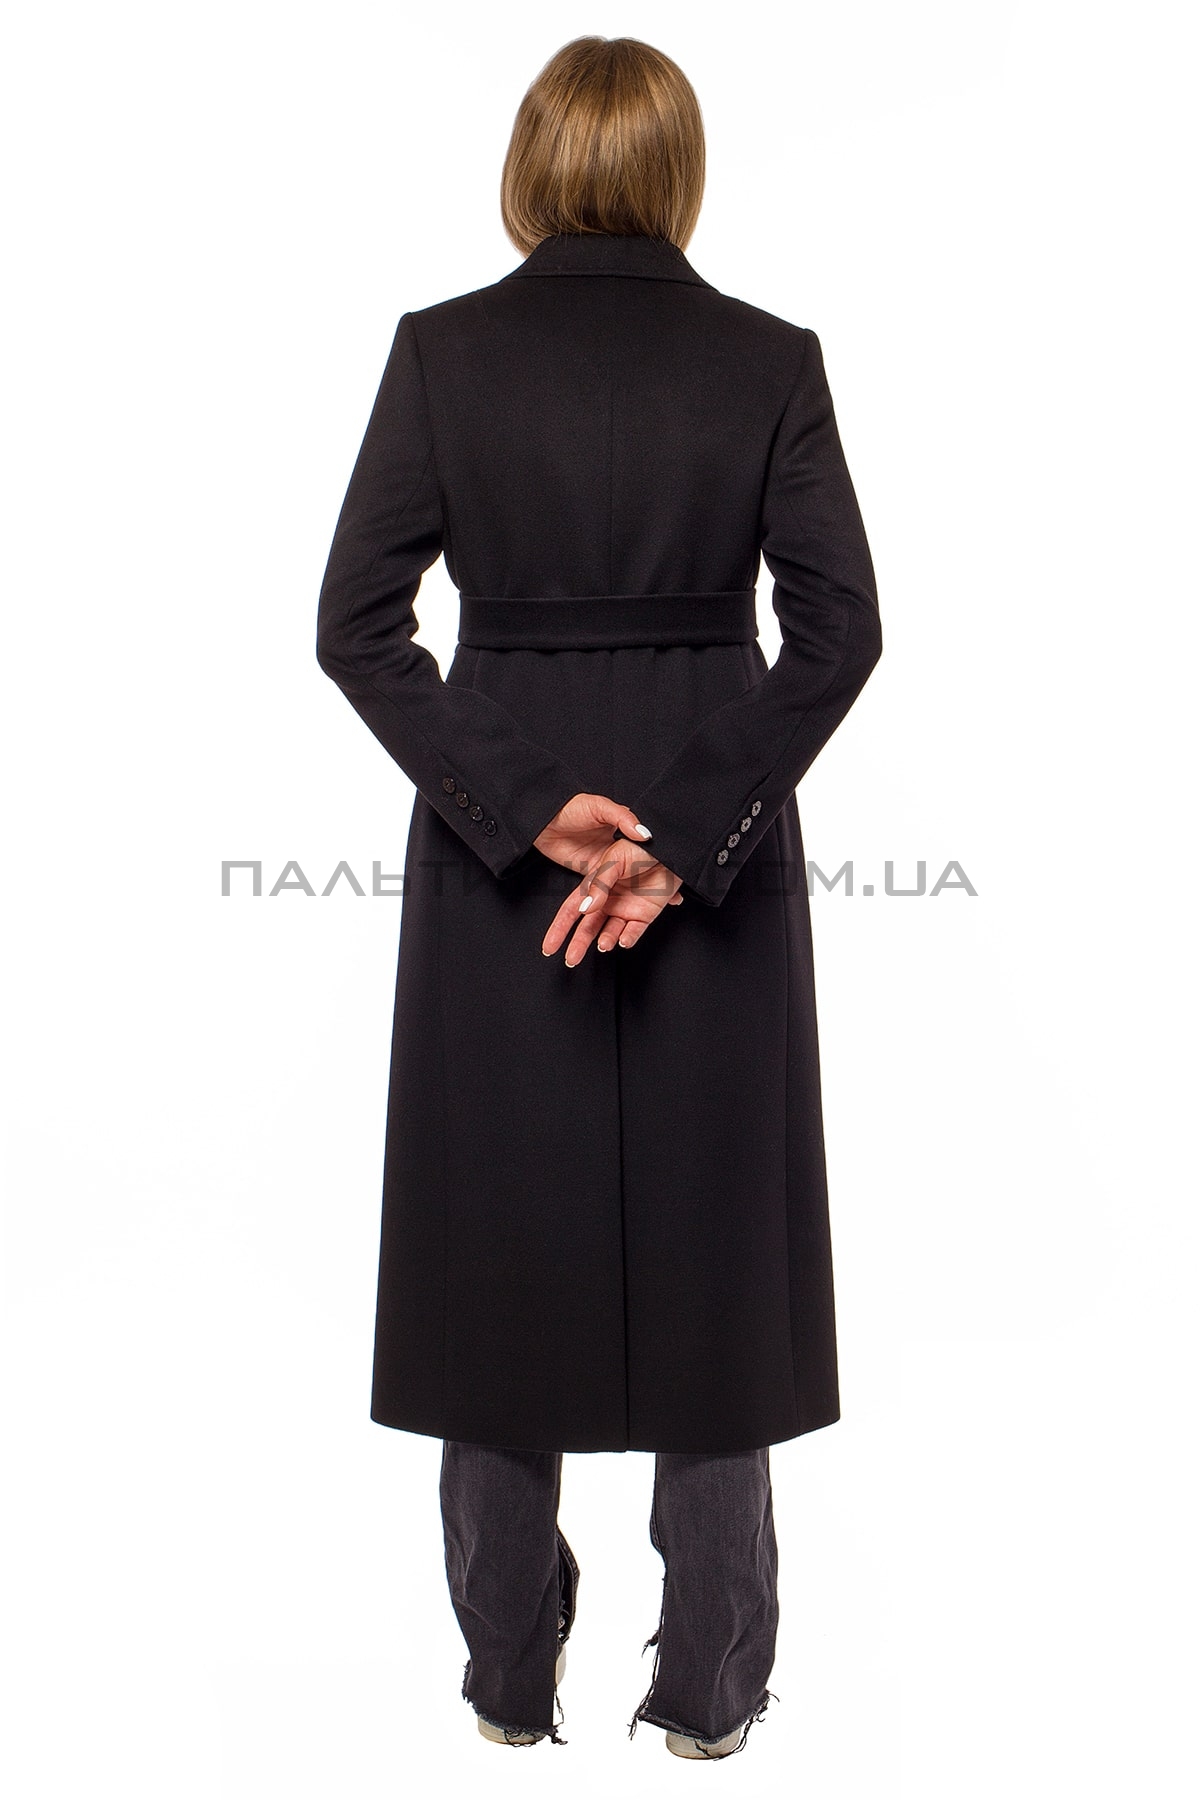  Пальто жіноче чорне